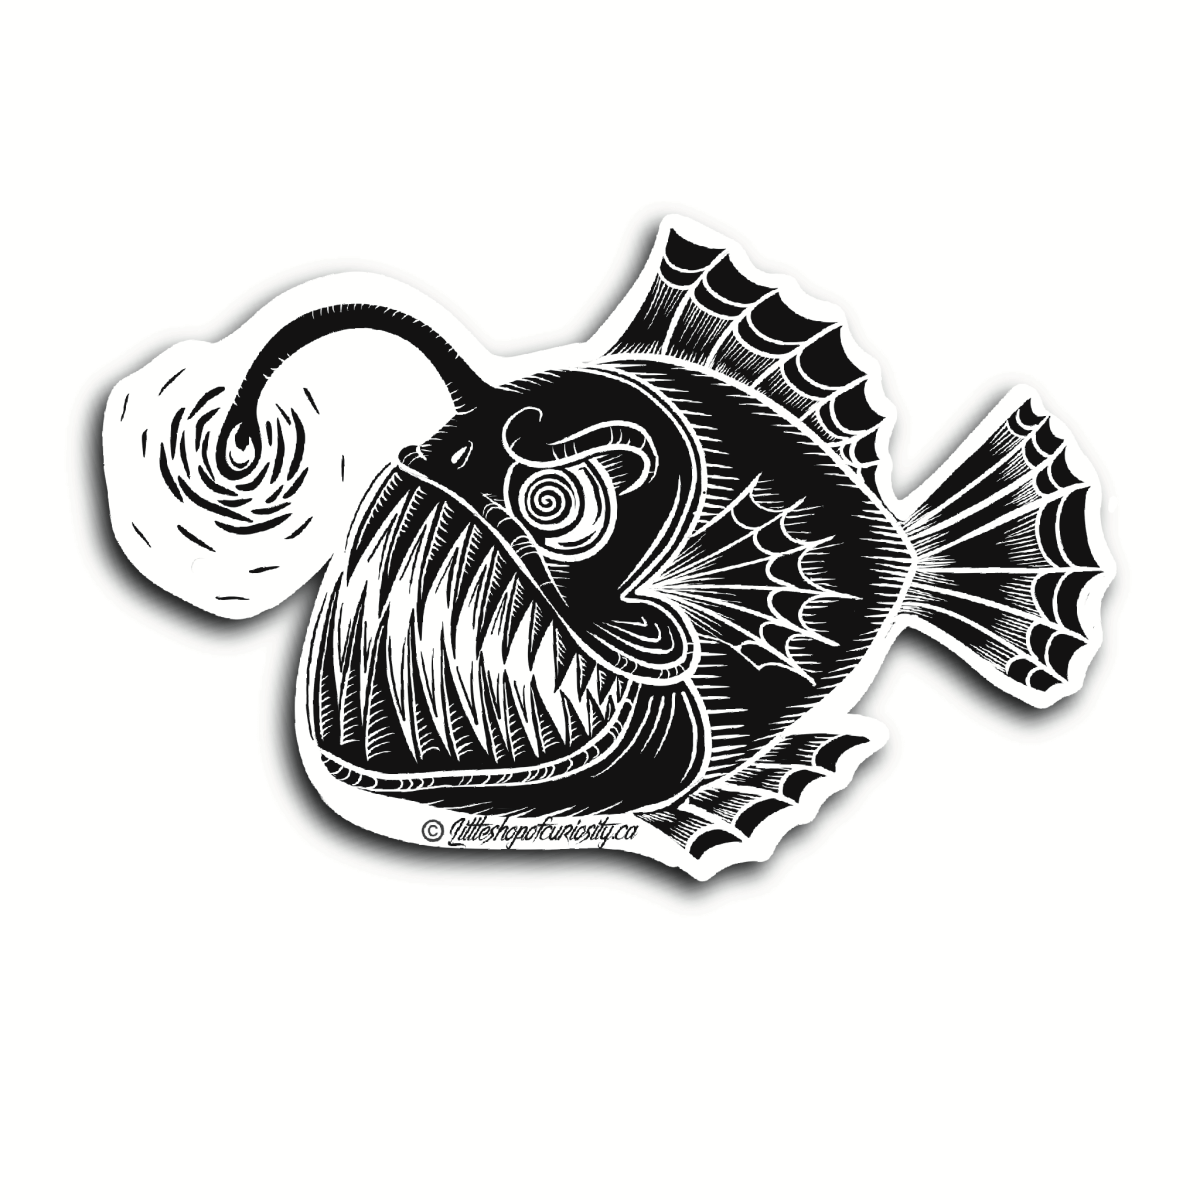 Angler Fish Sticker - Black & White Sticker - Little Shop of Curiosity